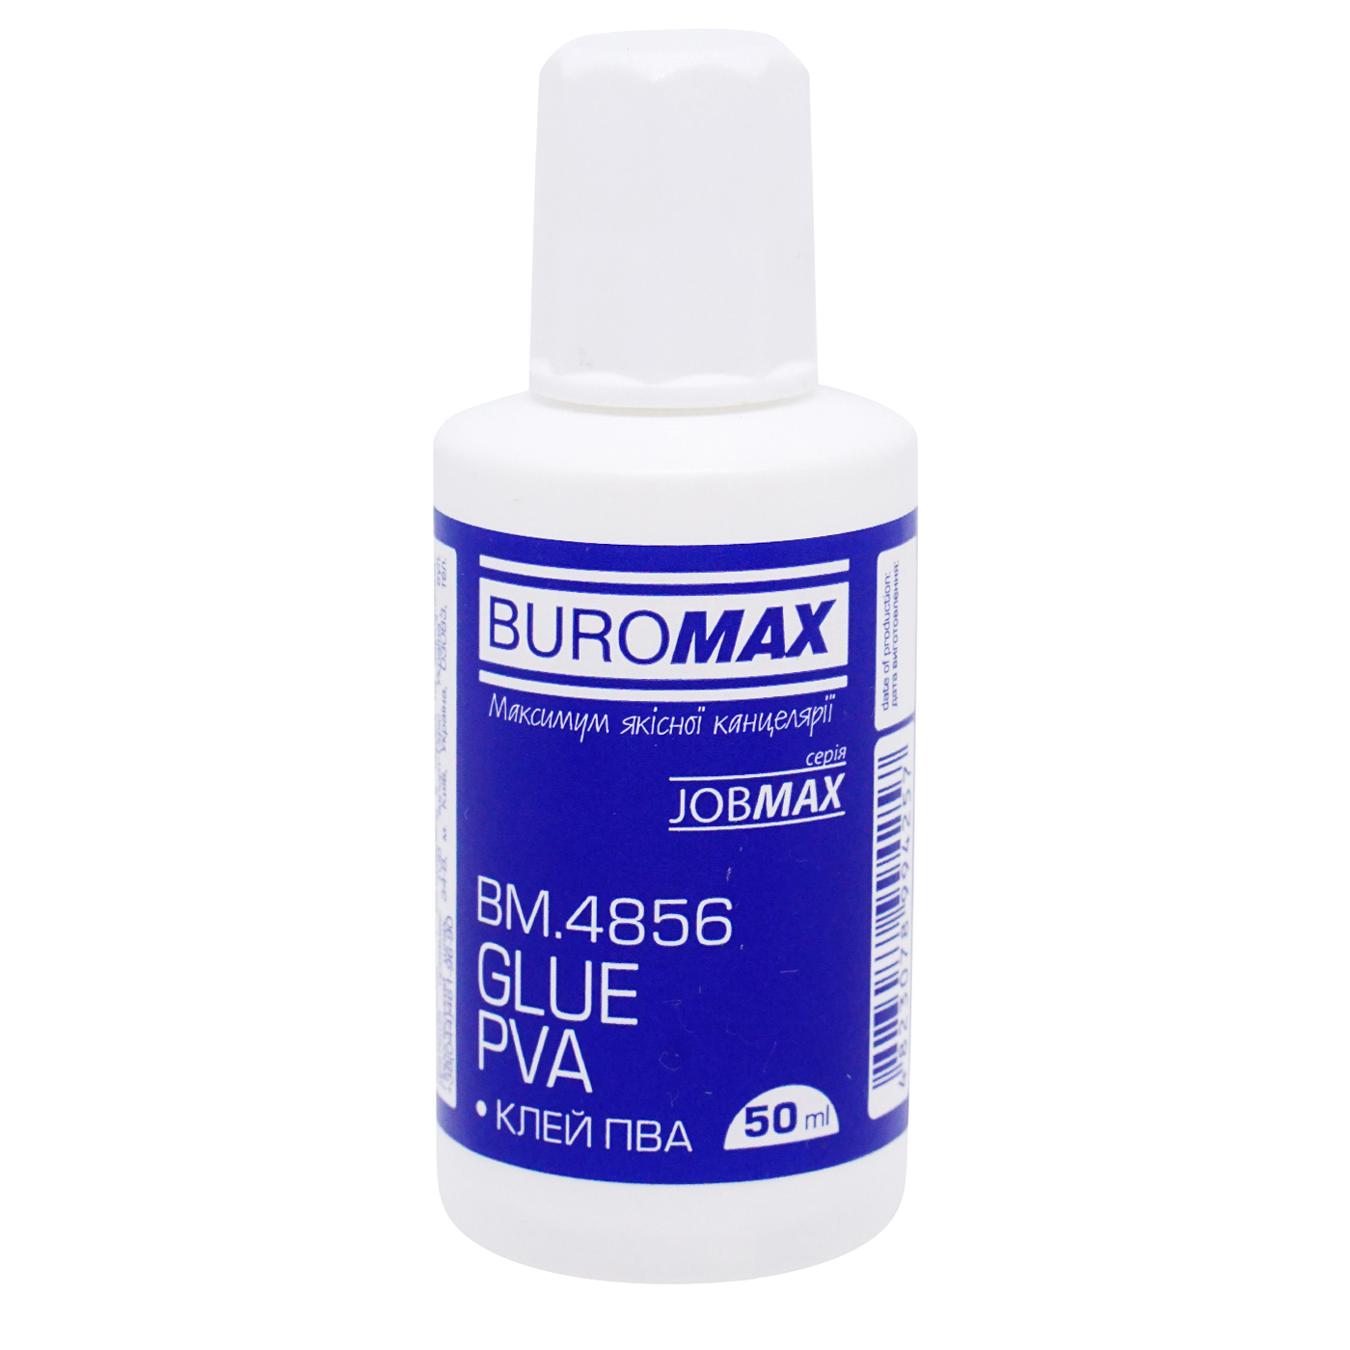 Buromax Jobmax PVA glue with brush 50 ml